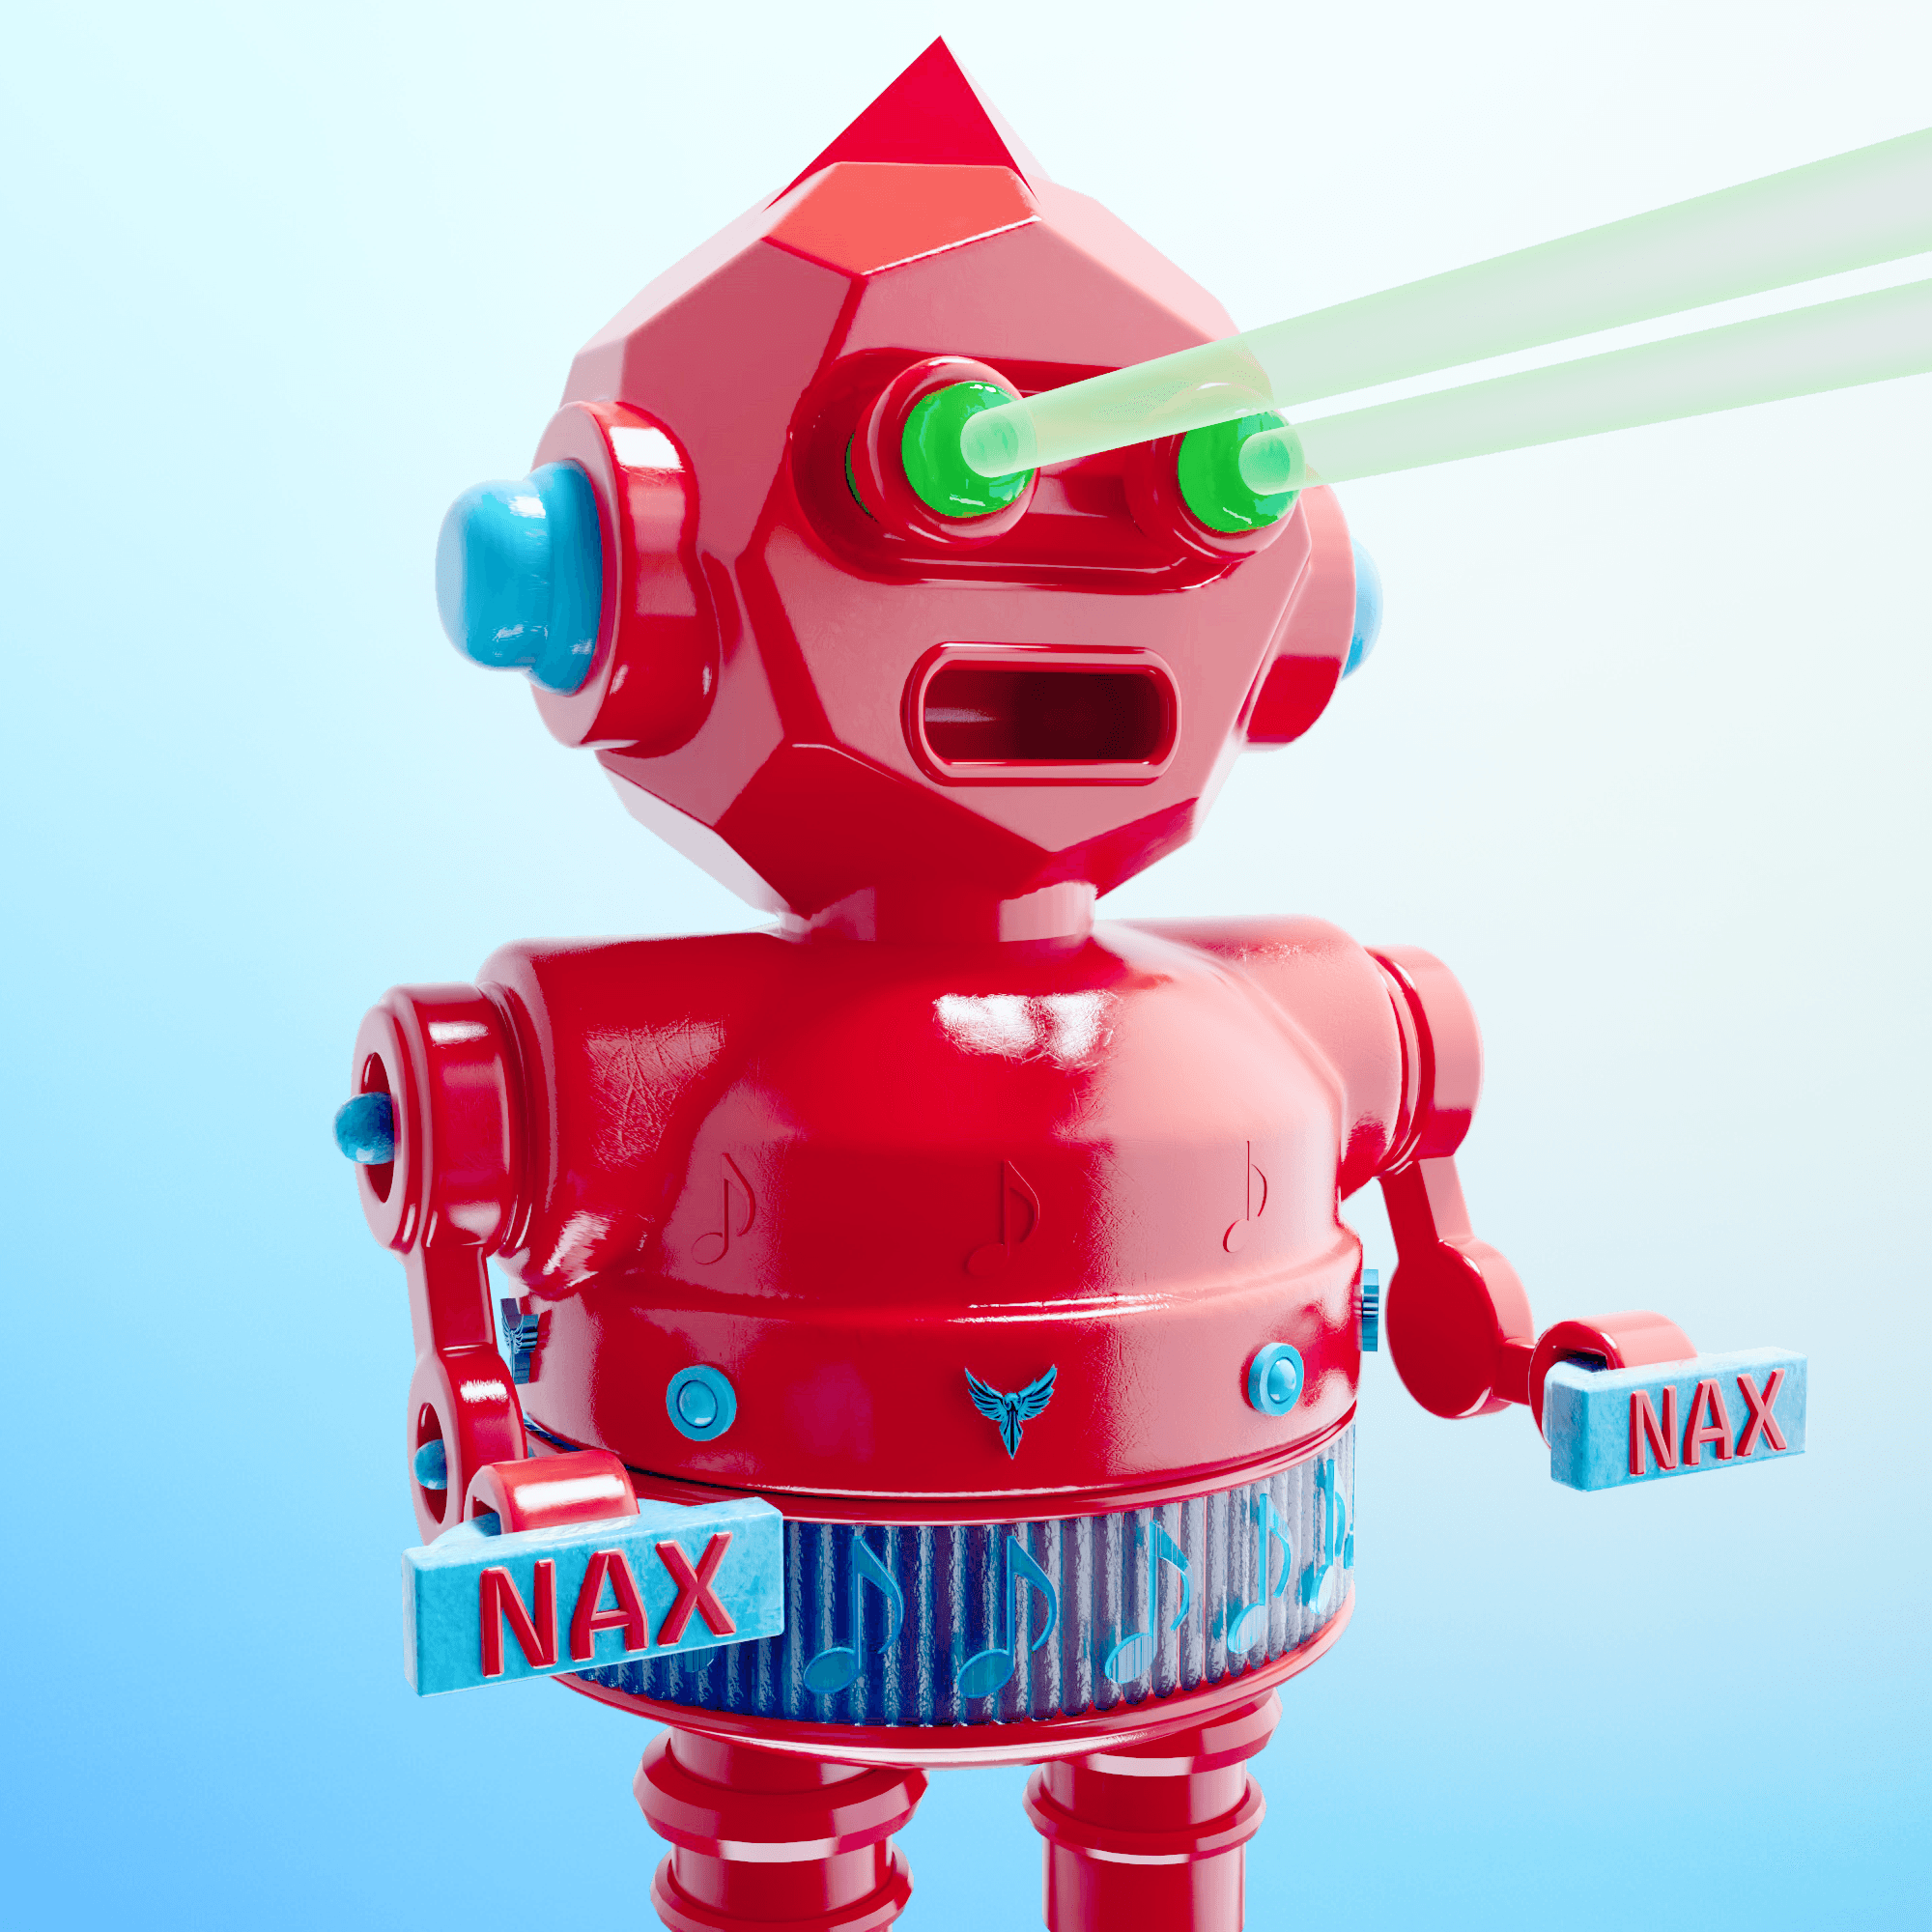 Nax Bot